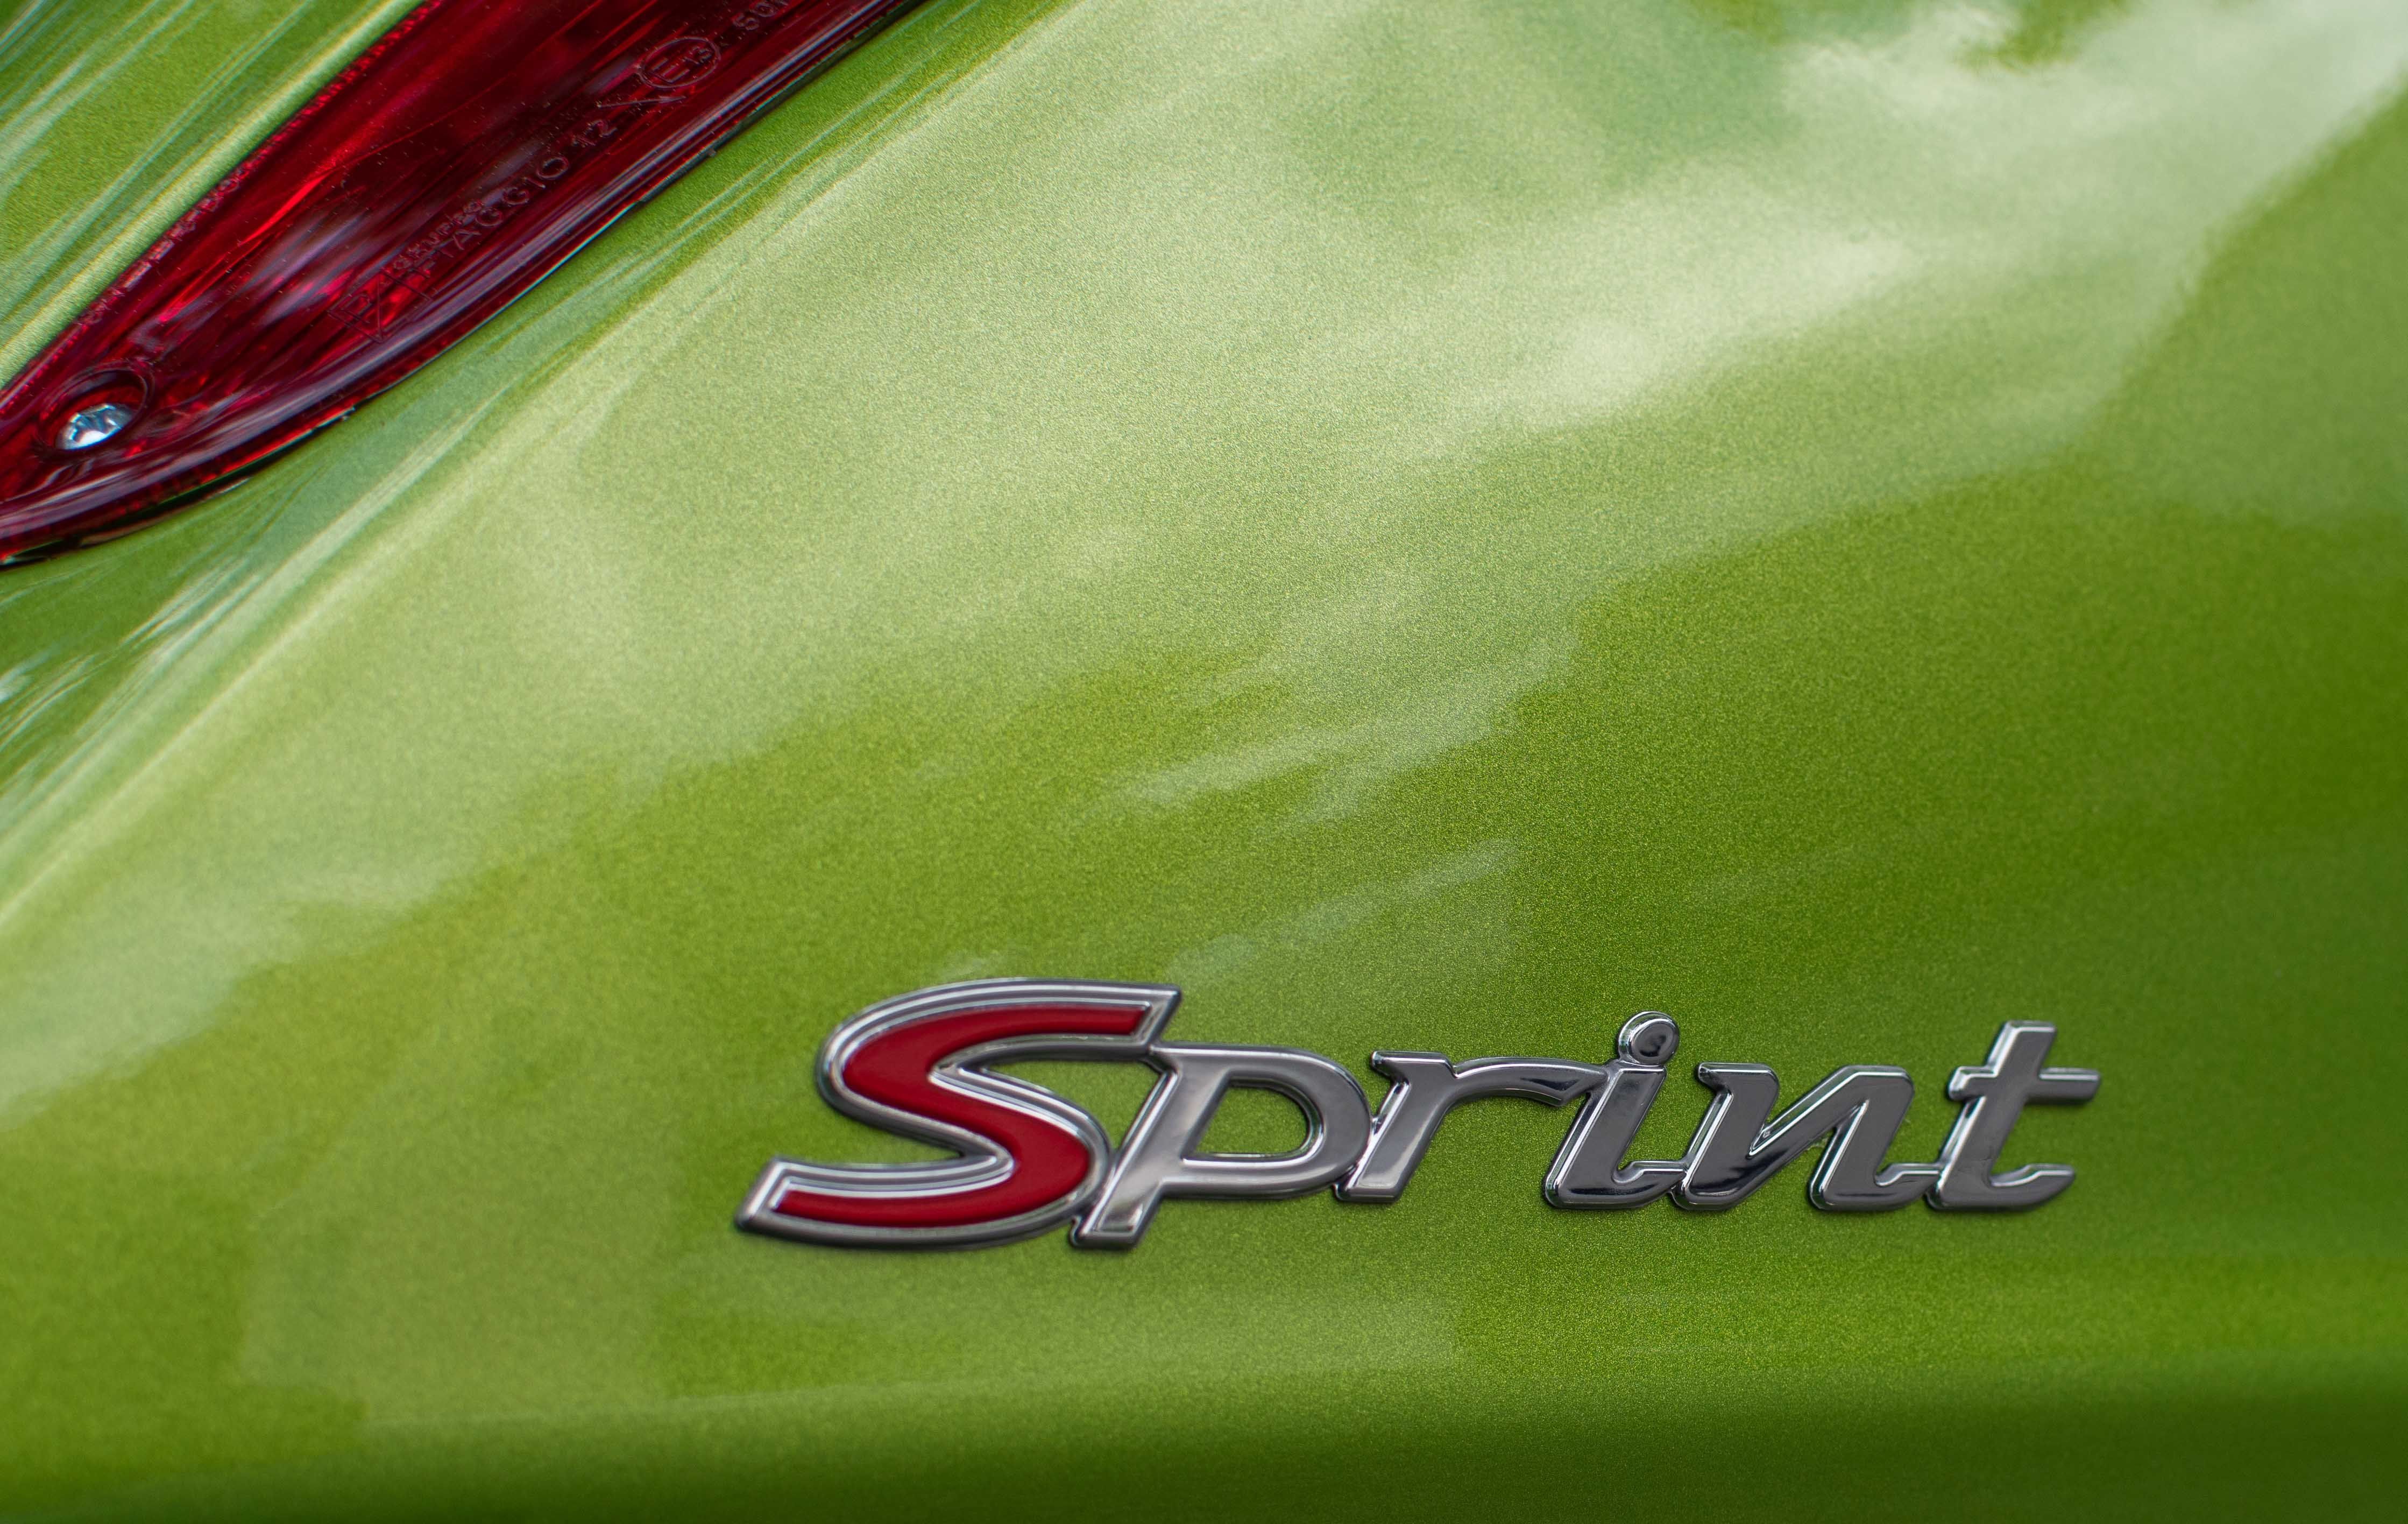 2019 - 2020 Vespa Sprint 150